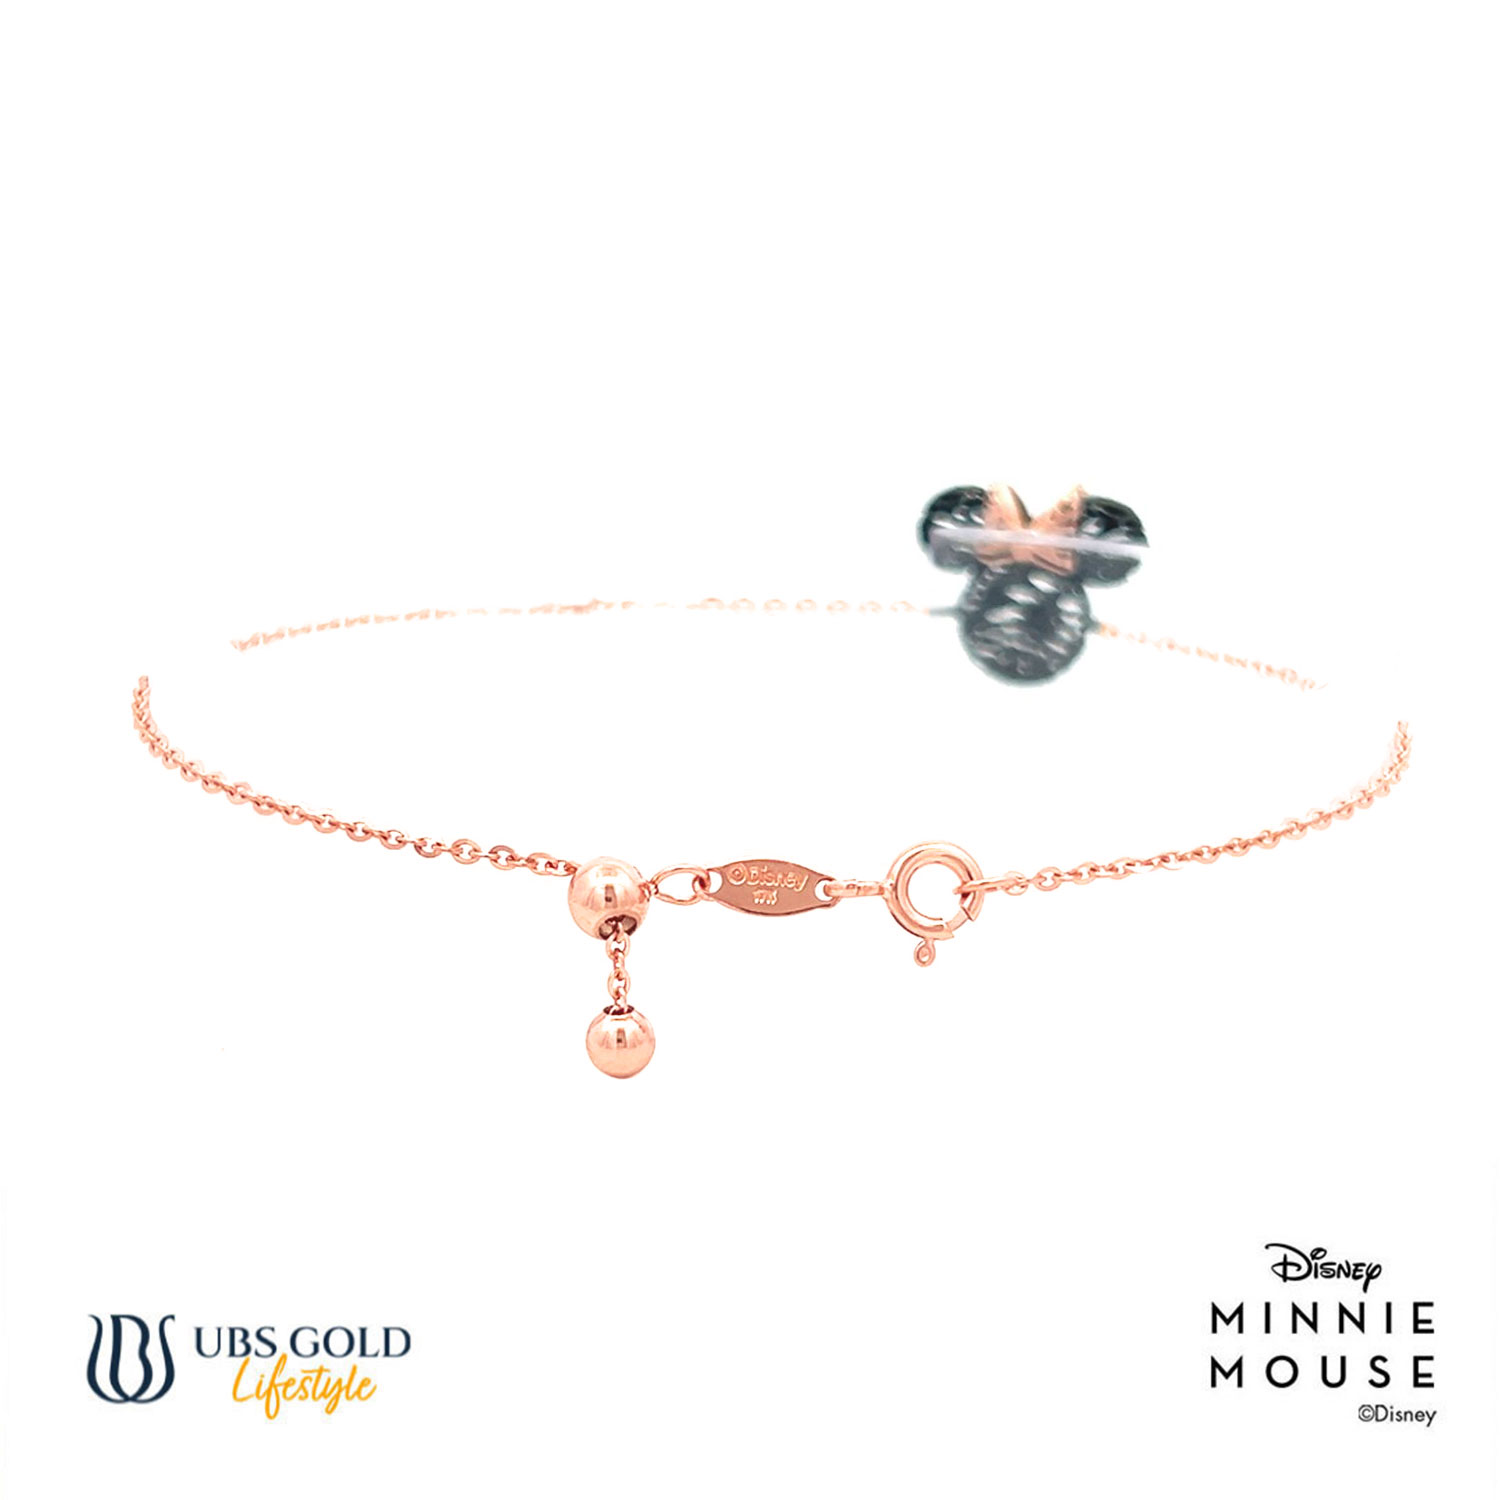 UBS Gold Gelang Emas Disney Minnie Mouse - Kgy0108 - 17K